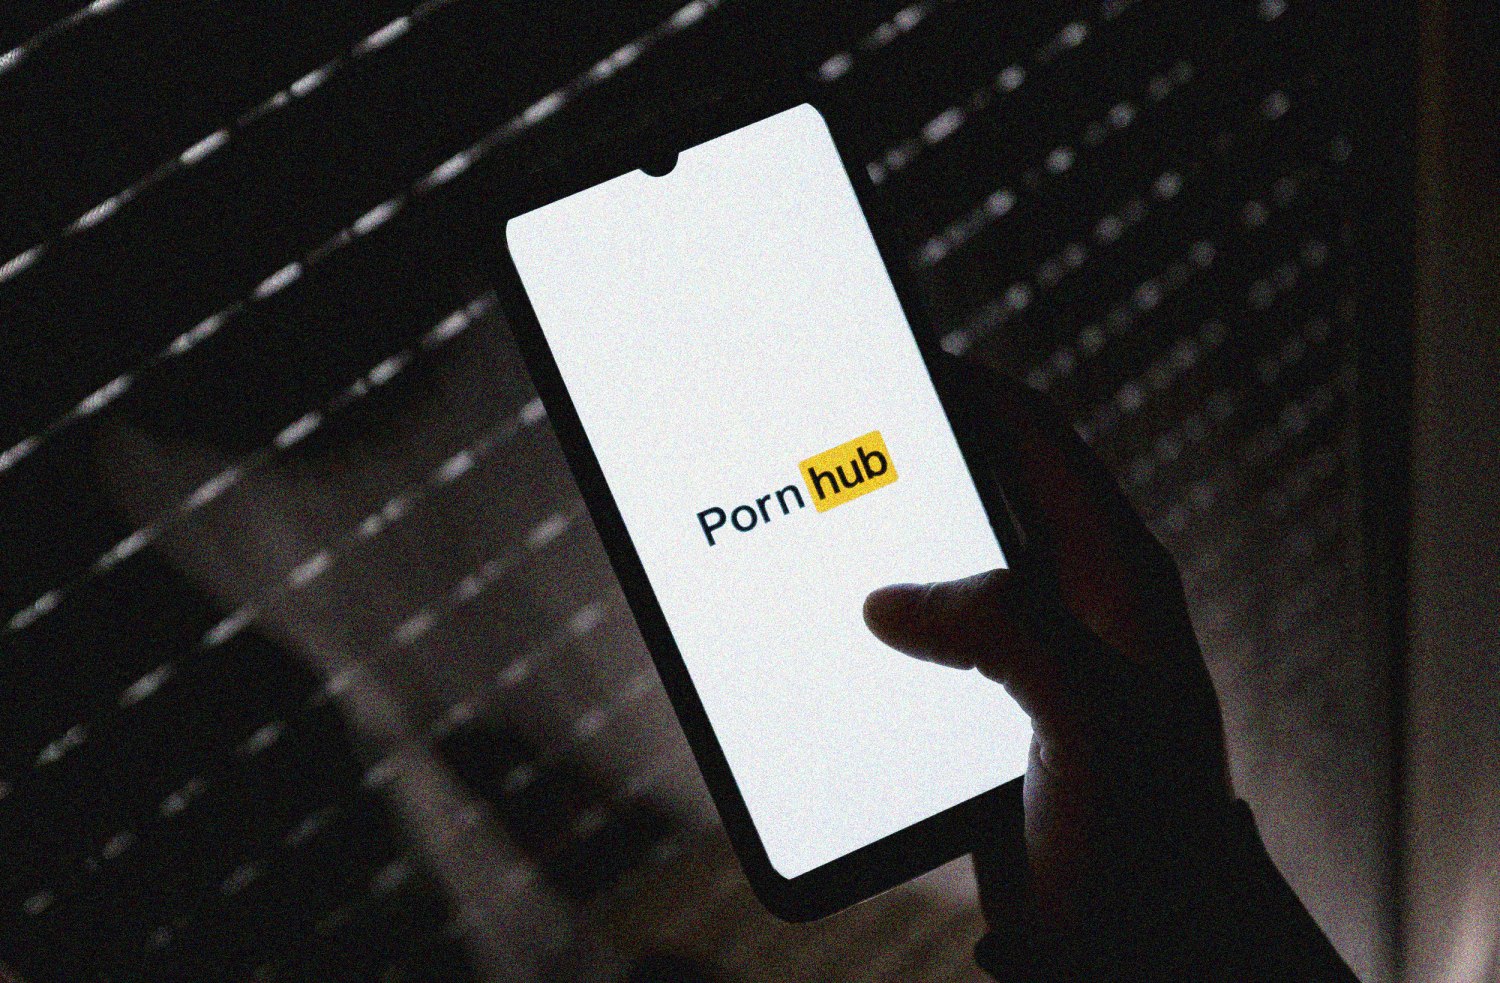 Ponhurb - Meet Pornhub's new owner: Ethical Capital Partners